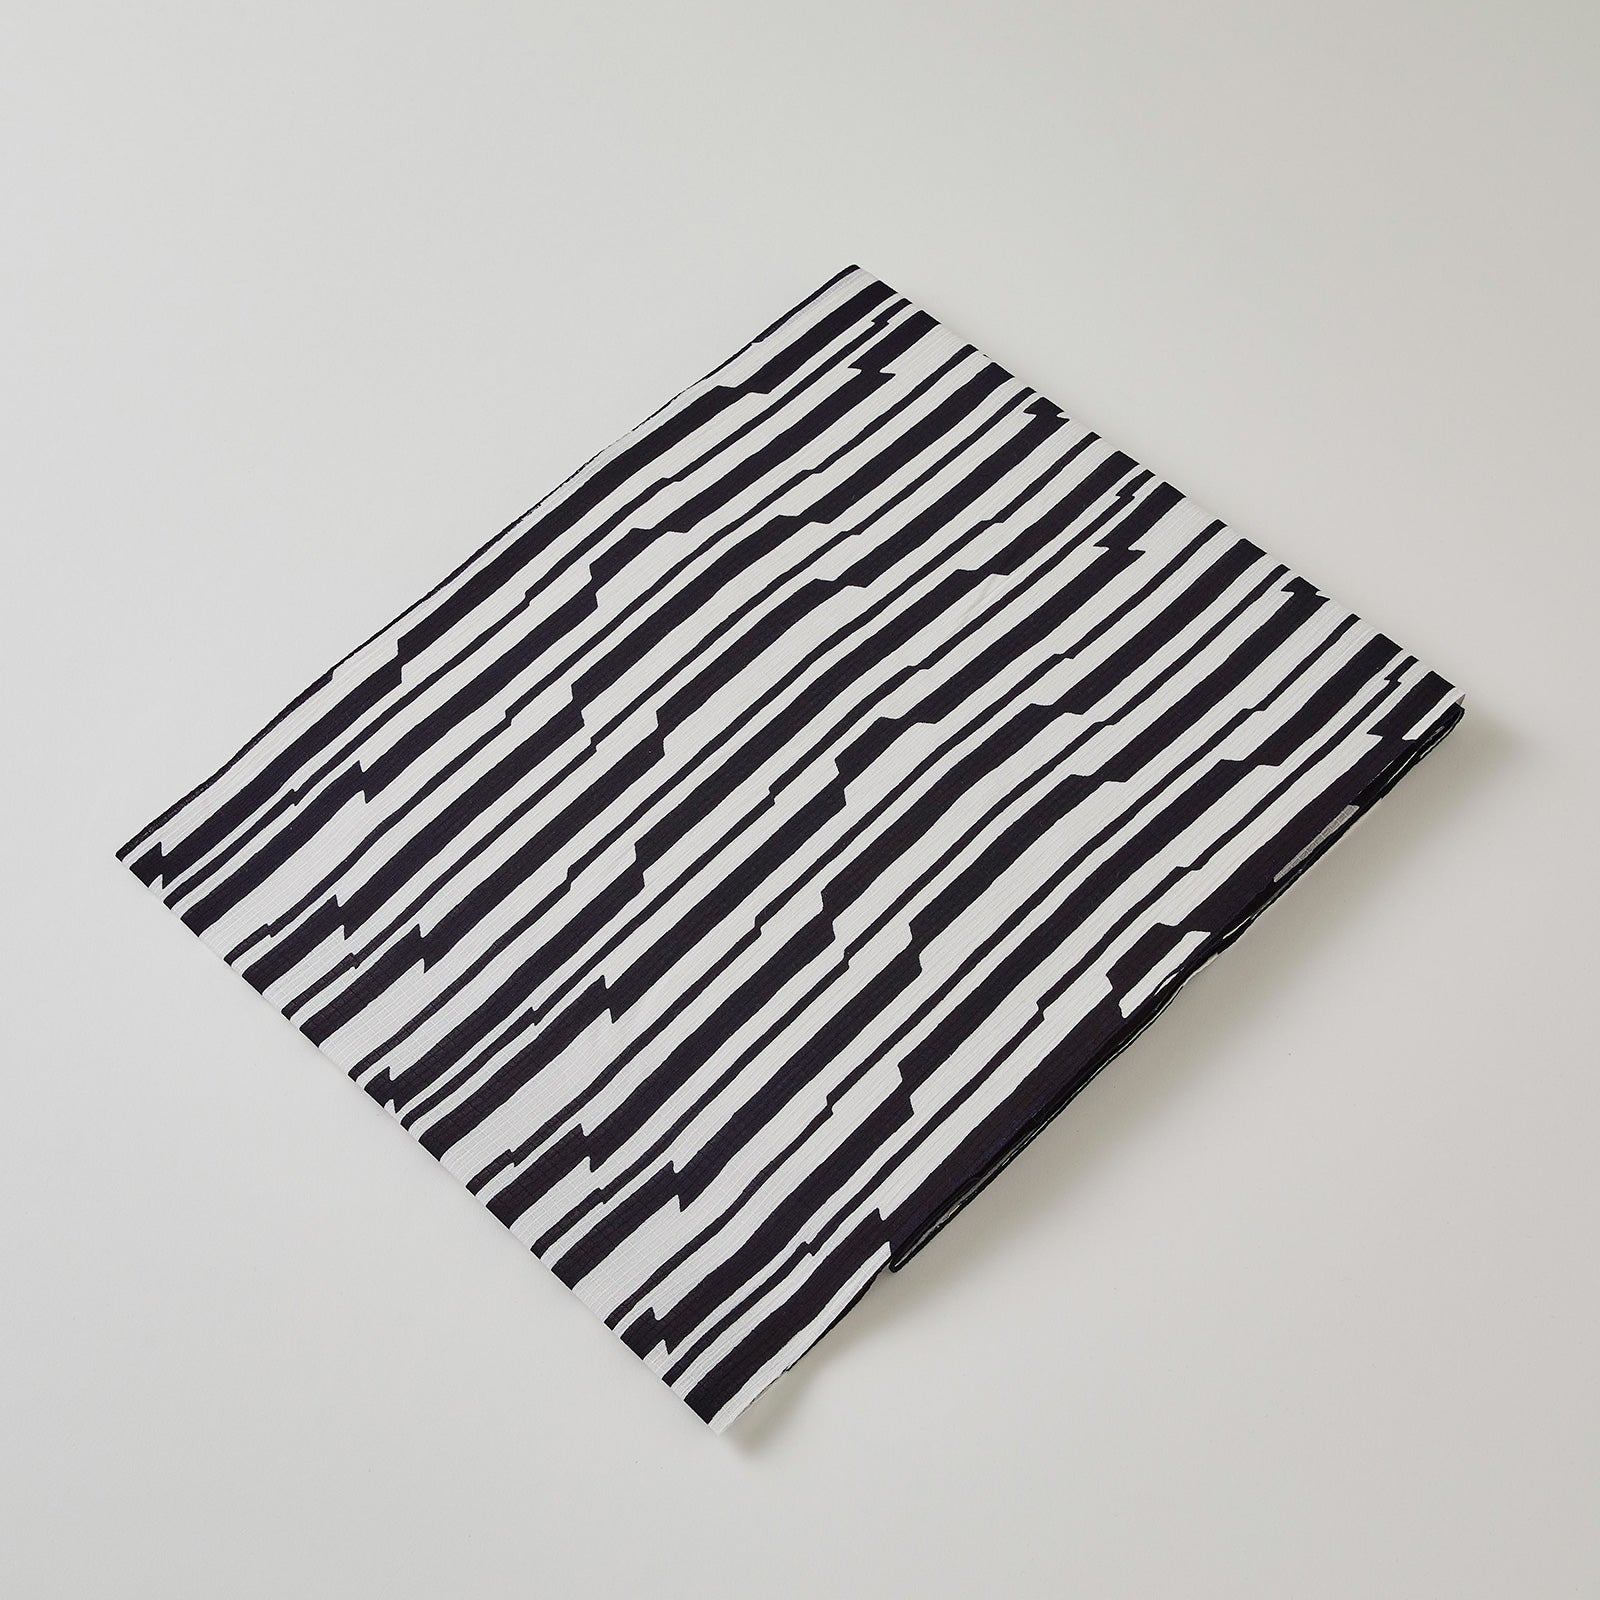 KAPUKI original yukata "Jagged stripes" black